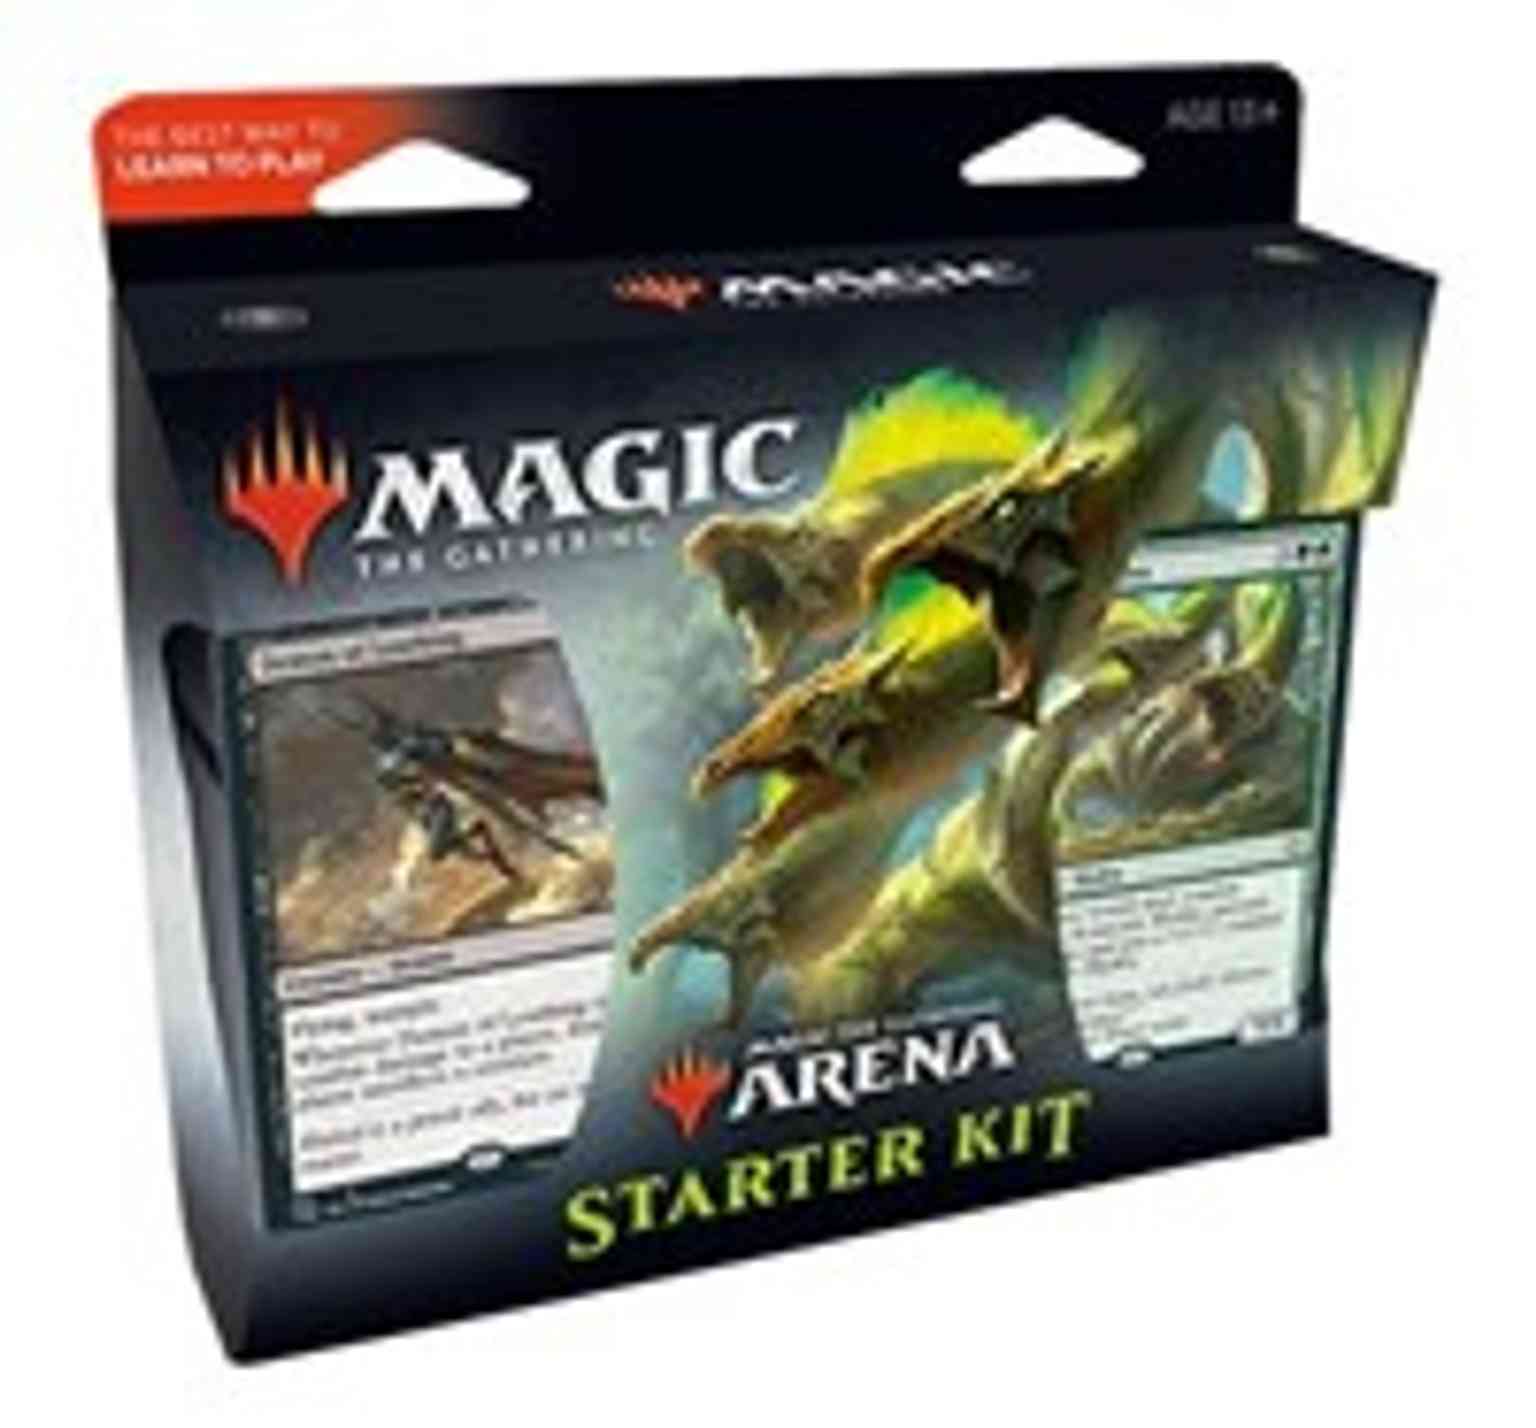 Arena Starter Kit magic card front